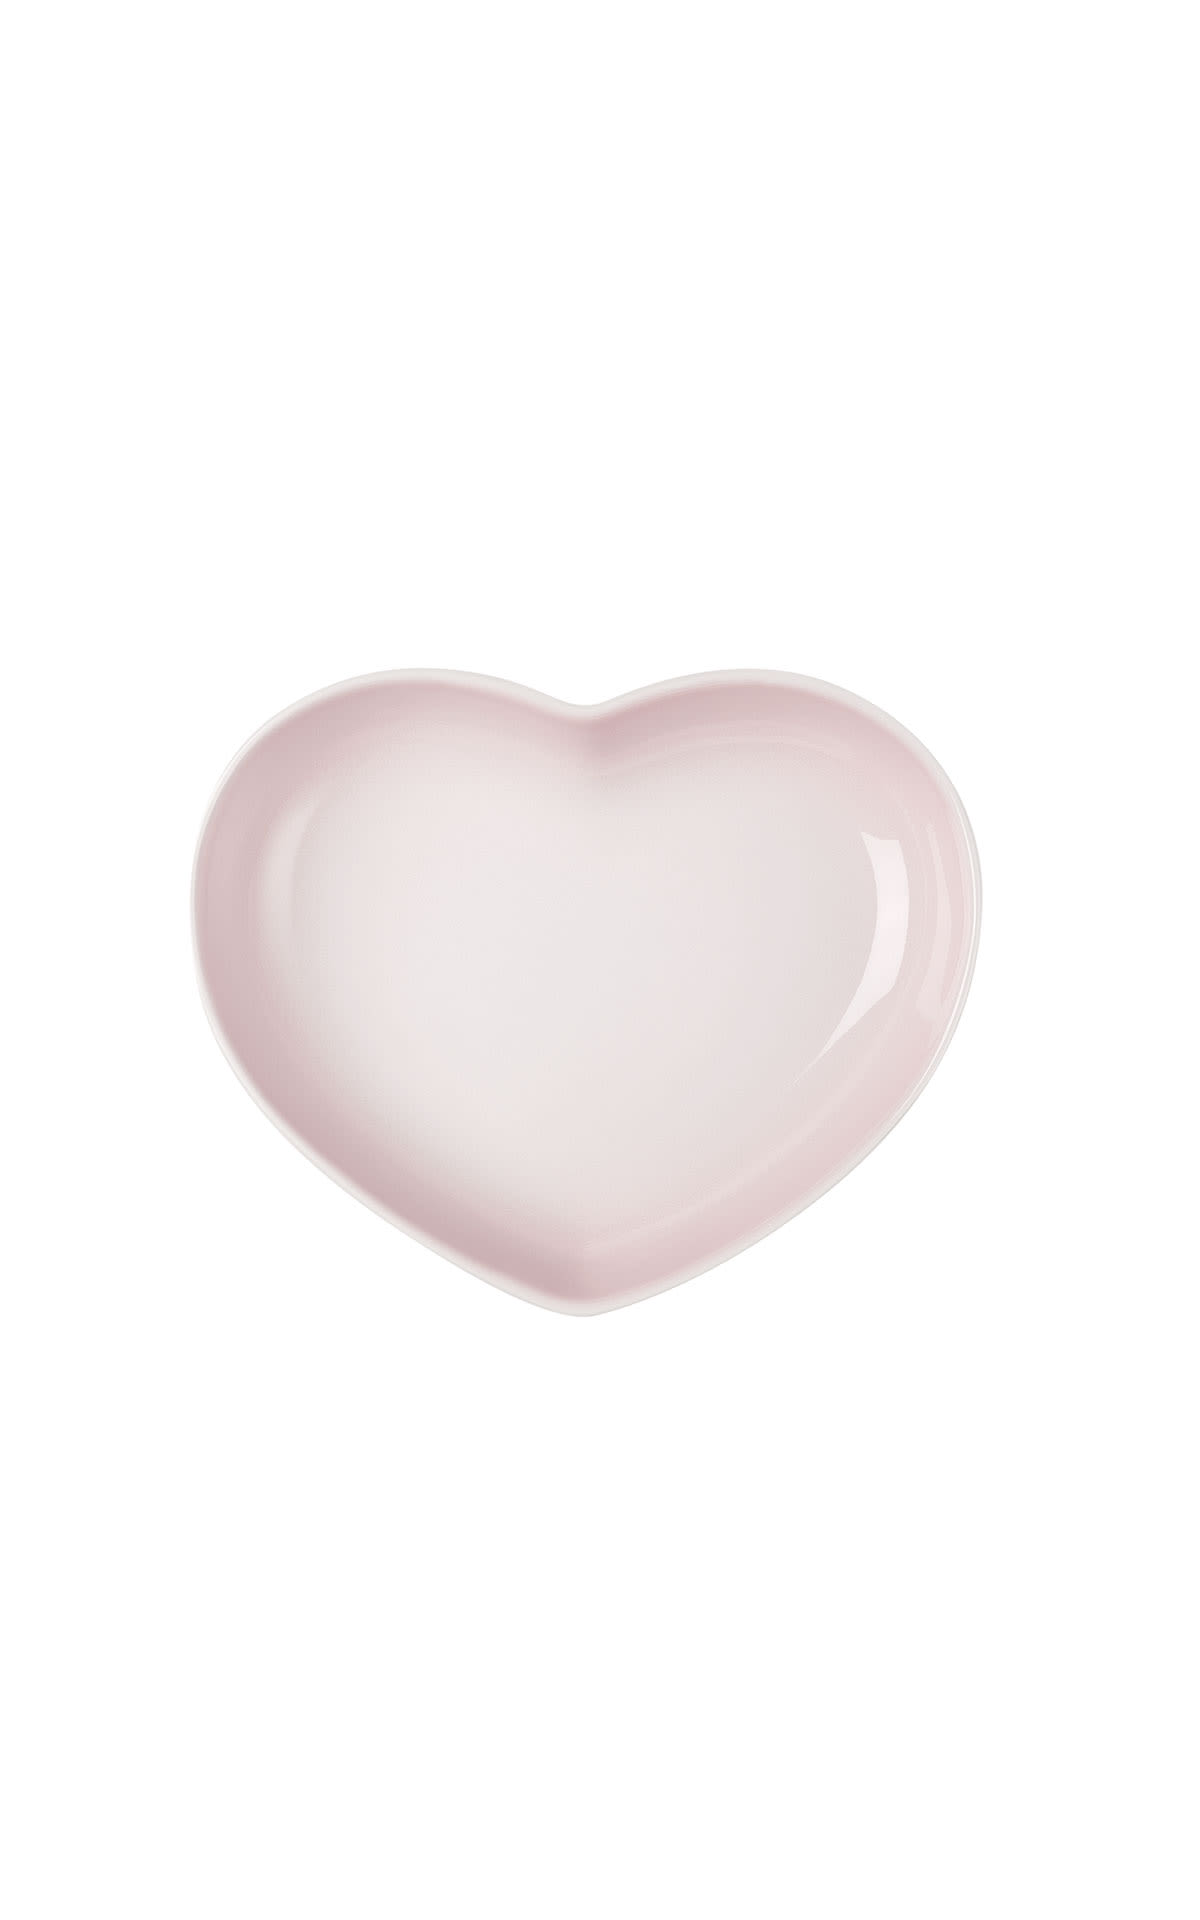 Heart-shaped stoneware plate le creuset